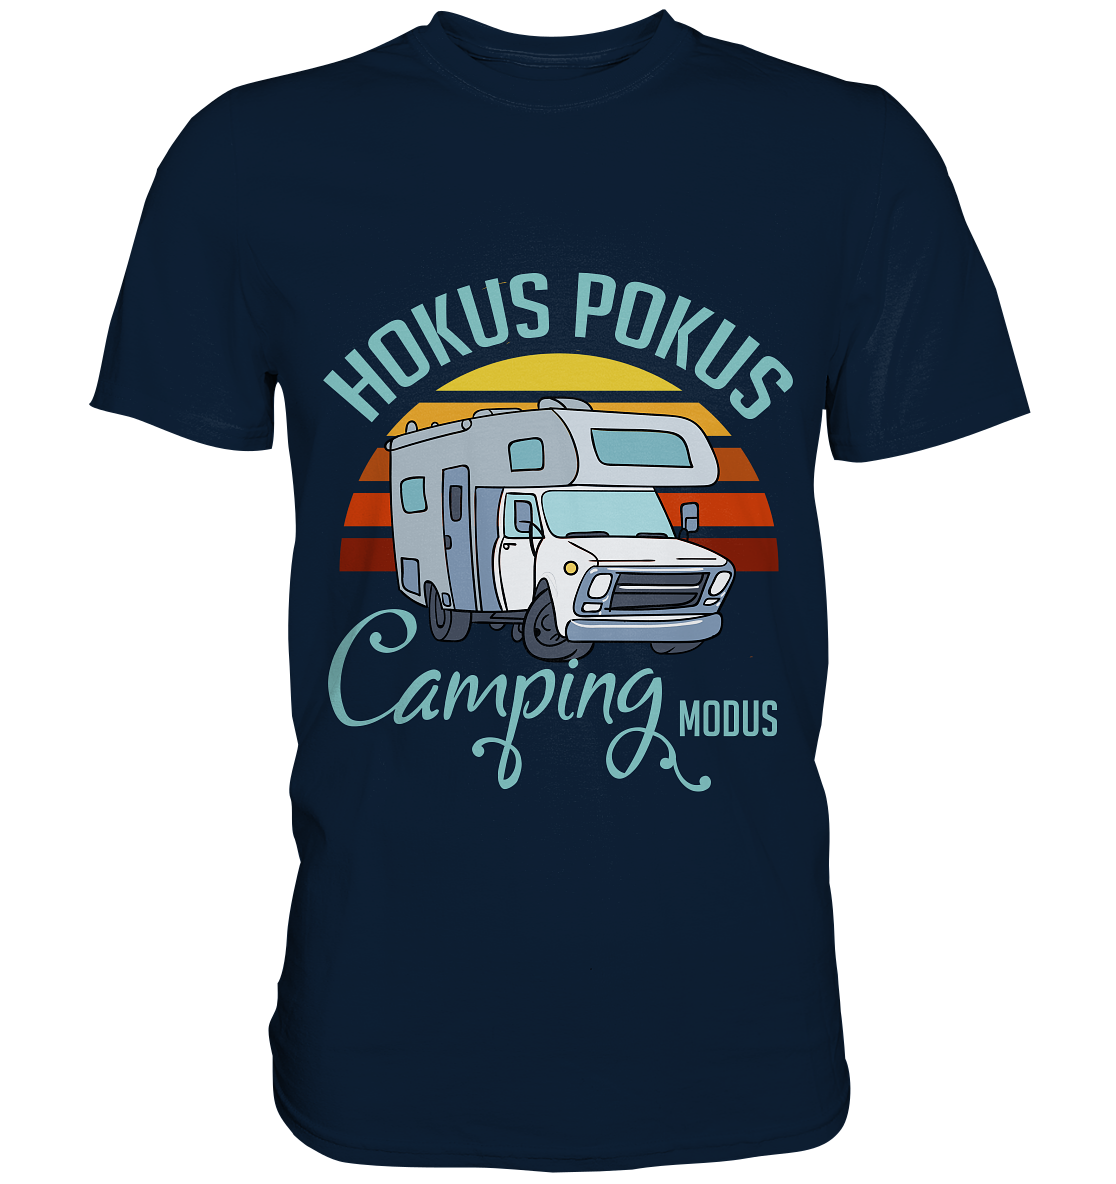 Hokus Pokus Camping Modus - Premium Shirt